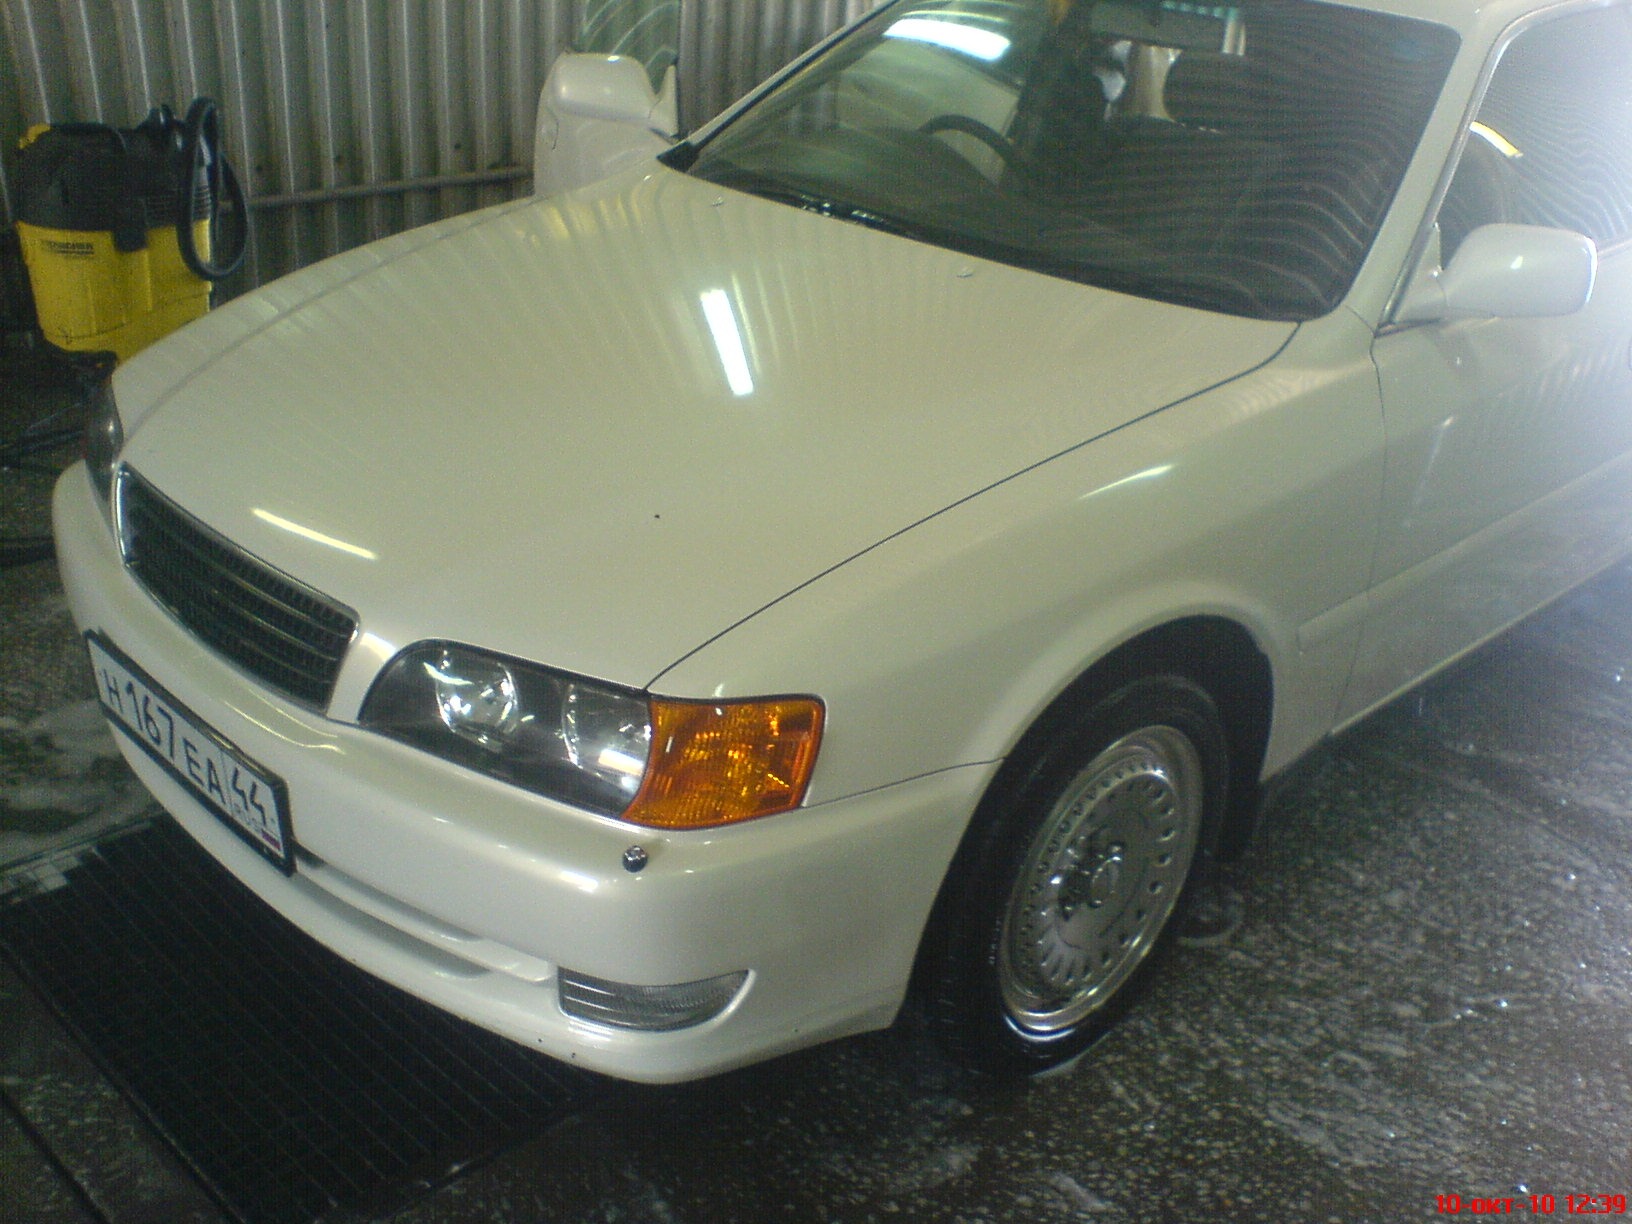   Toyota Chaser 25 1998